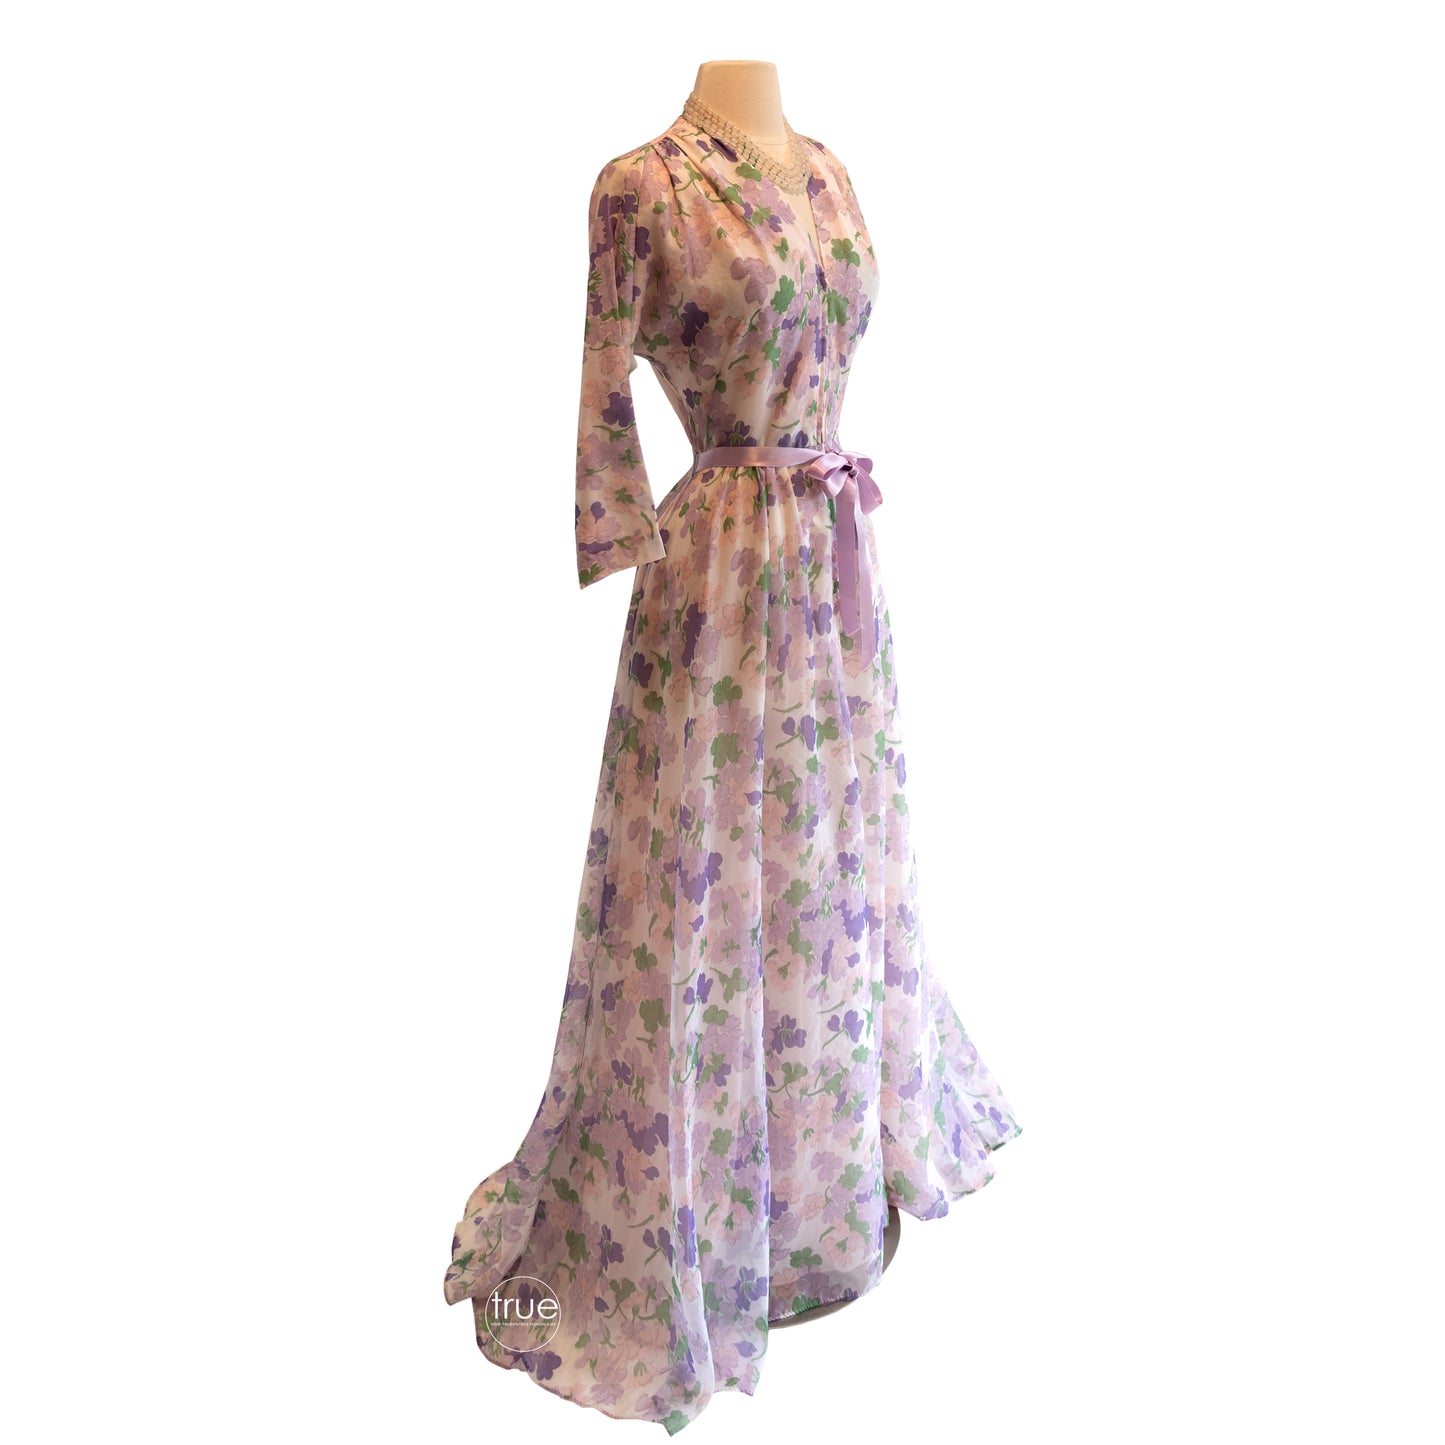 vintage 1940's dress ...ethereal floaty spring floral dressing gown unworn